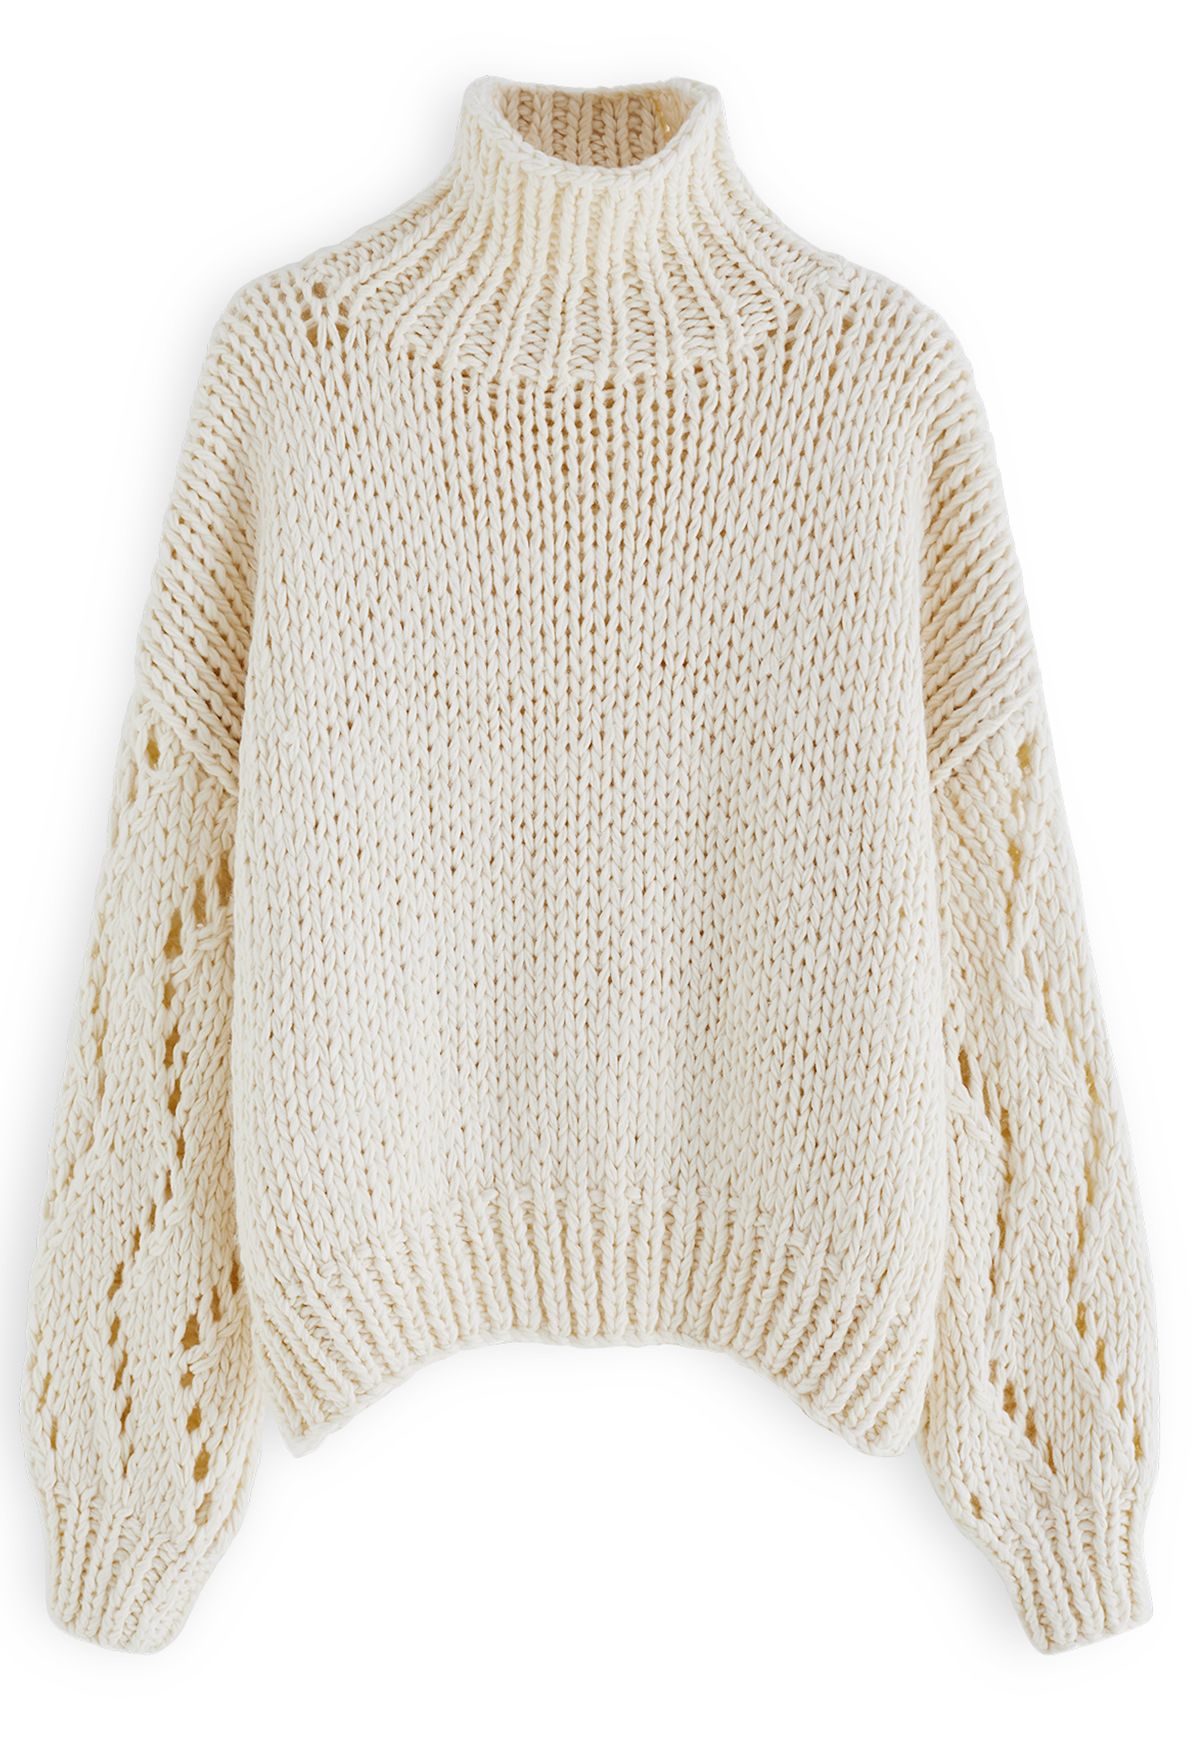 Pointelle Sleeve High Neck Hand-Knit Sweater in Cream - Retro, Indie ...